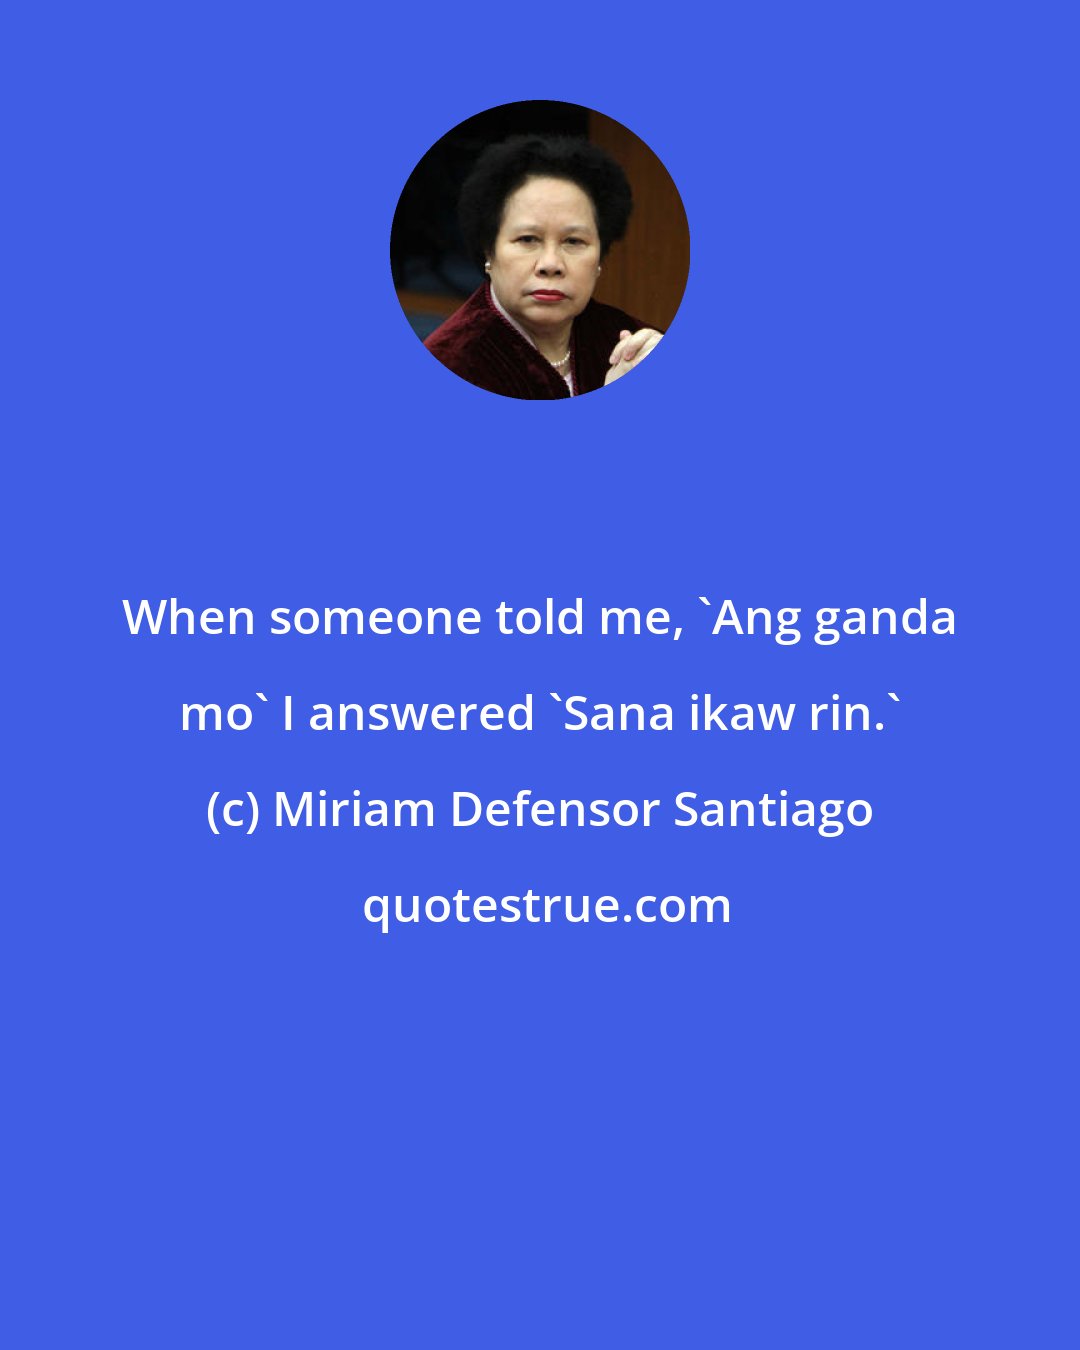 Miriam Defensor Santiago: When someone told me, 'Ang ganda mo' I answered 'Sana ikaw rin.'